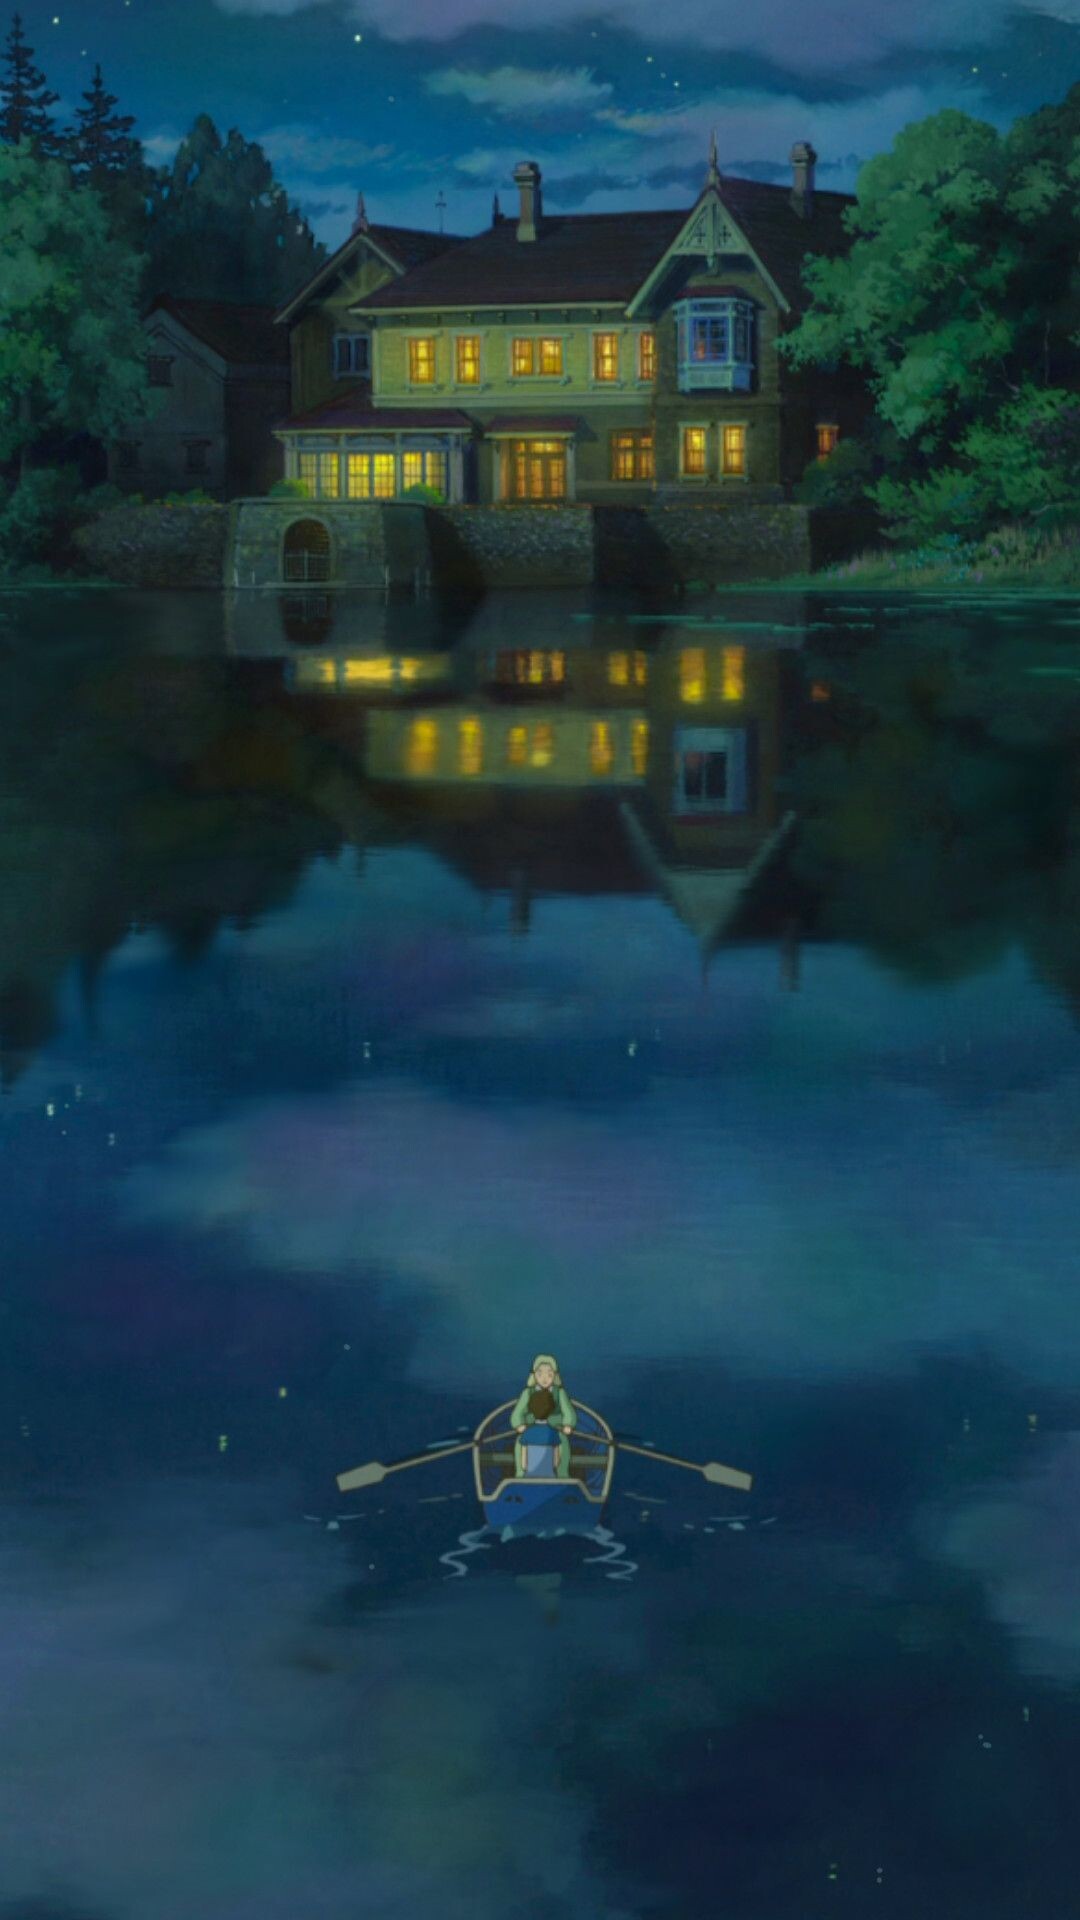 Studio Ghibli: The idea of Hayao Miyazaki, A Japanese animator, director, producer, screenwriter, author, and manga artist. 1080x1920 Full HD Background.